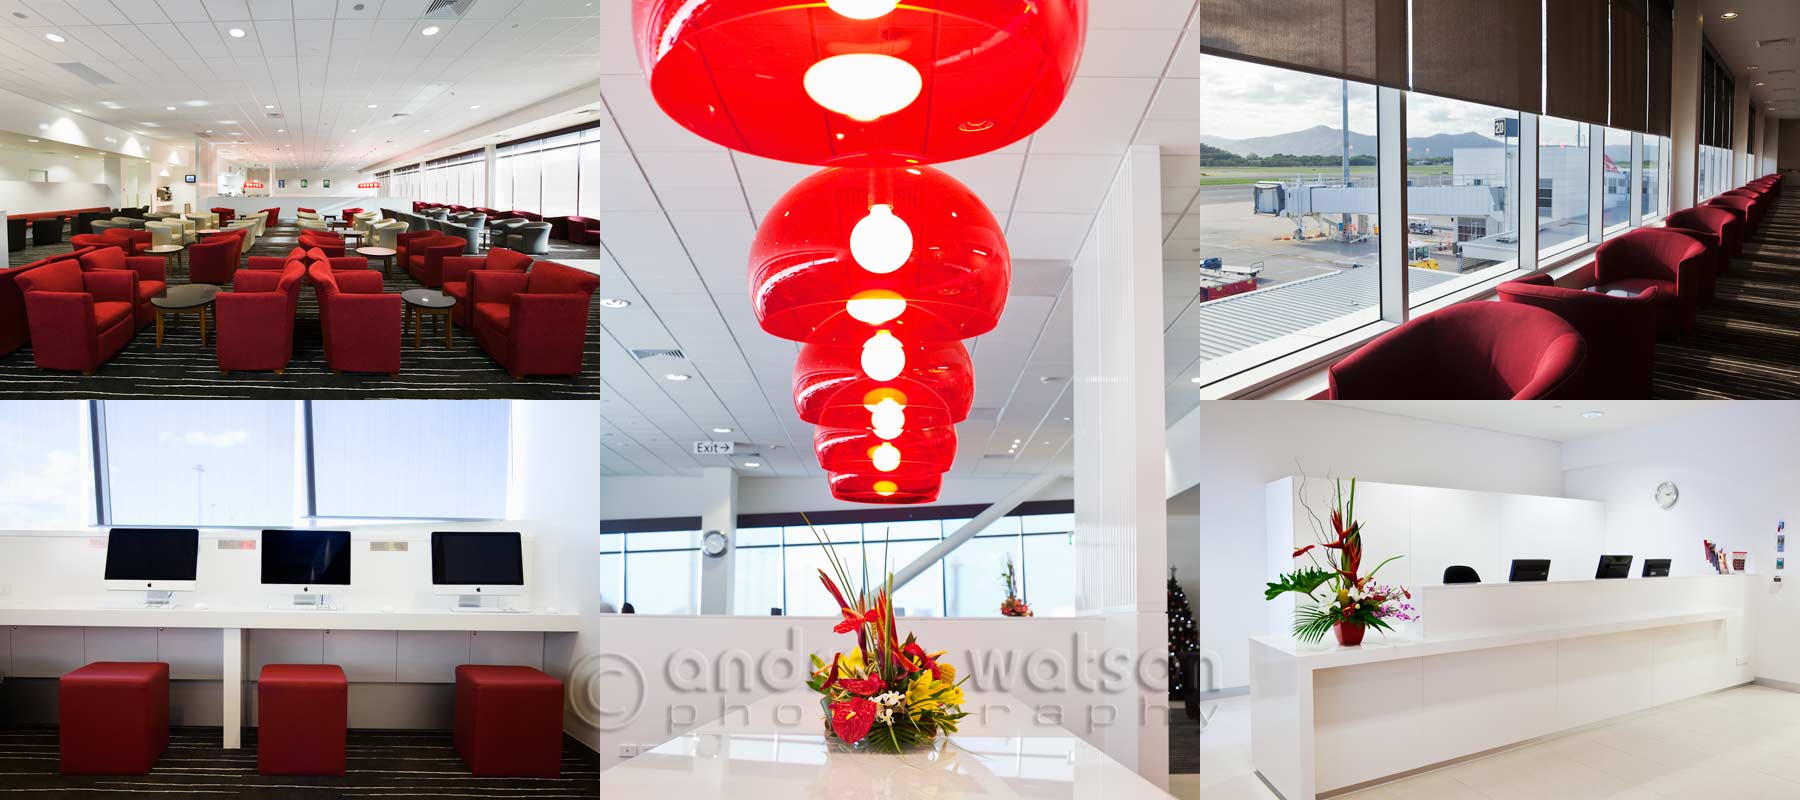 Interiors photography - Qantas Club lounge at Cairns Airport